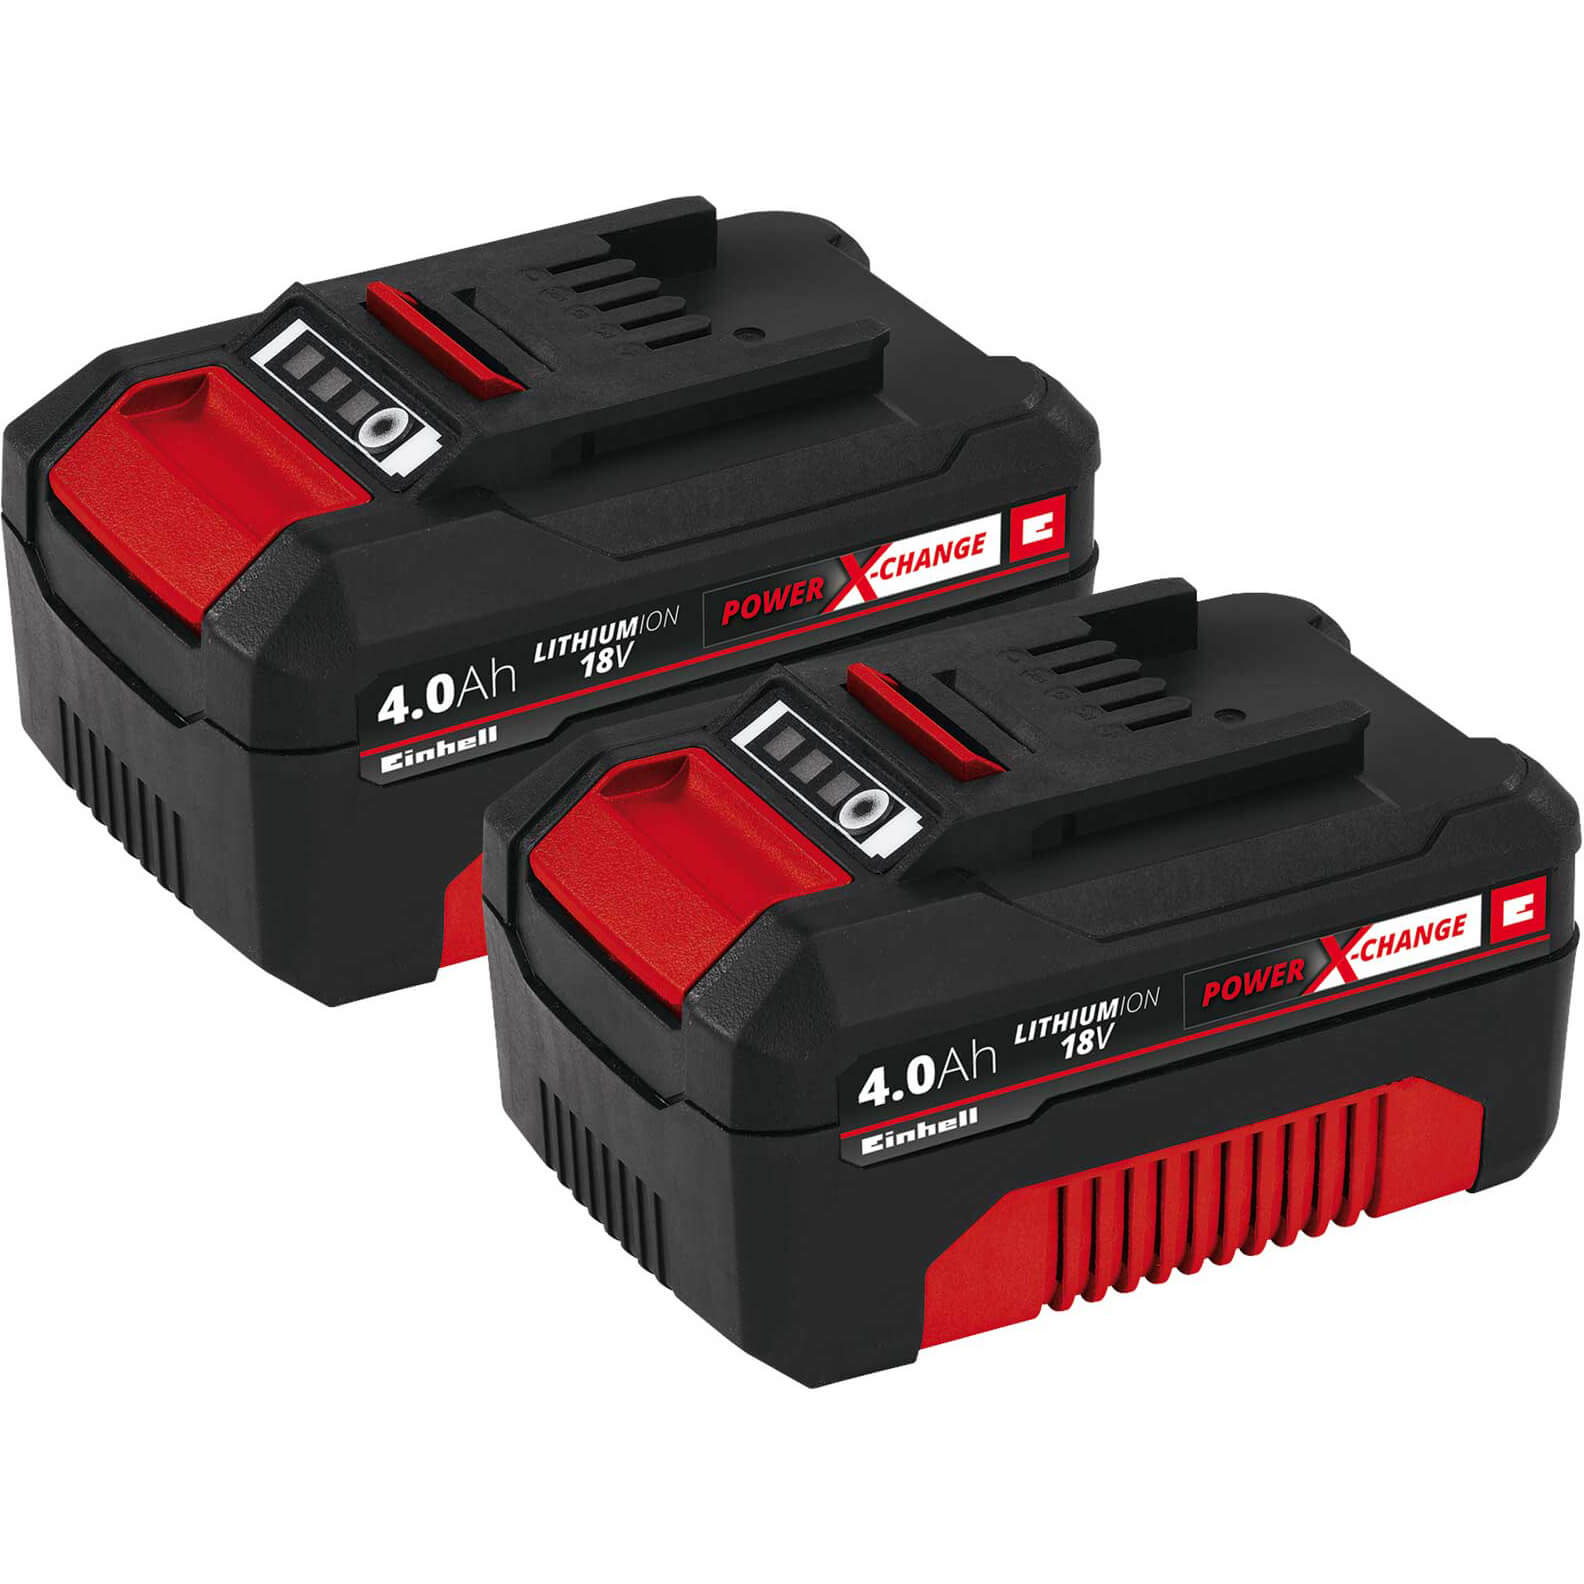 Einhell Genuine Power X-Change Twin Pack Cordless Batteries 4ah 4ah